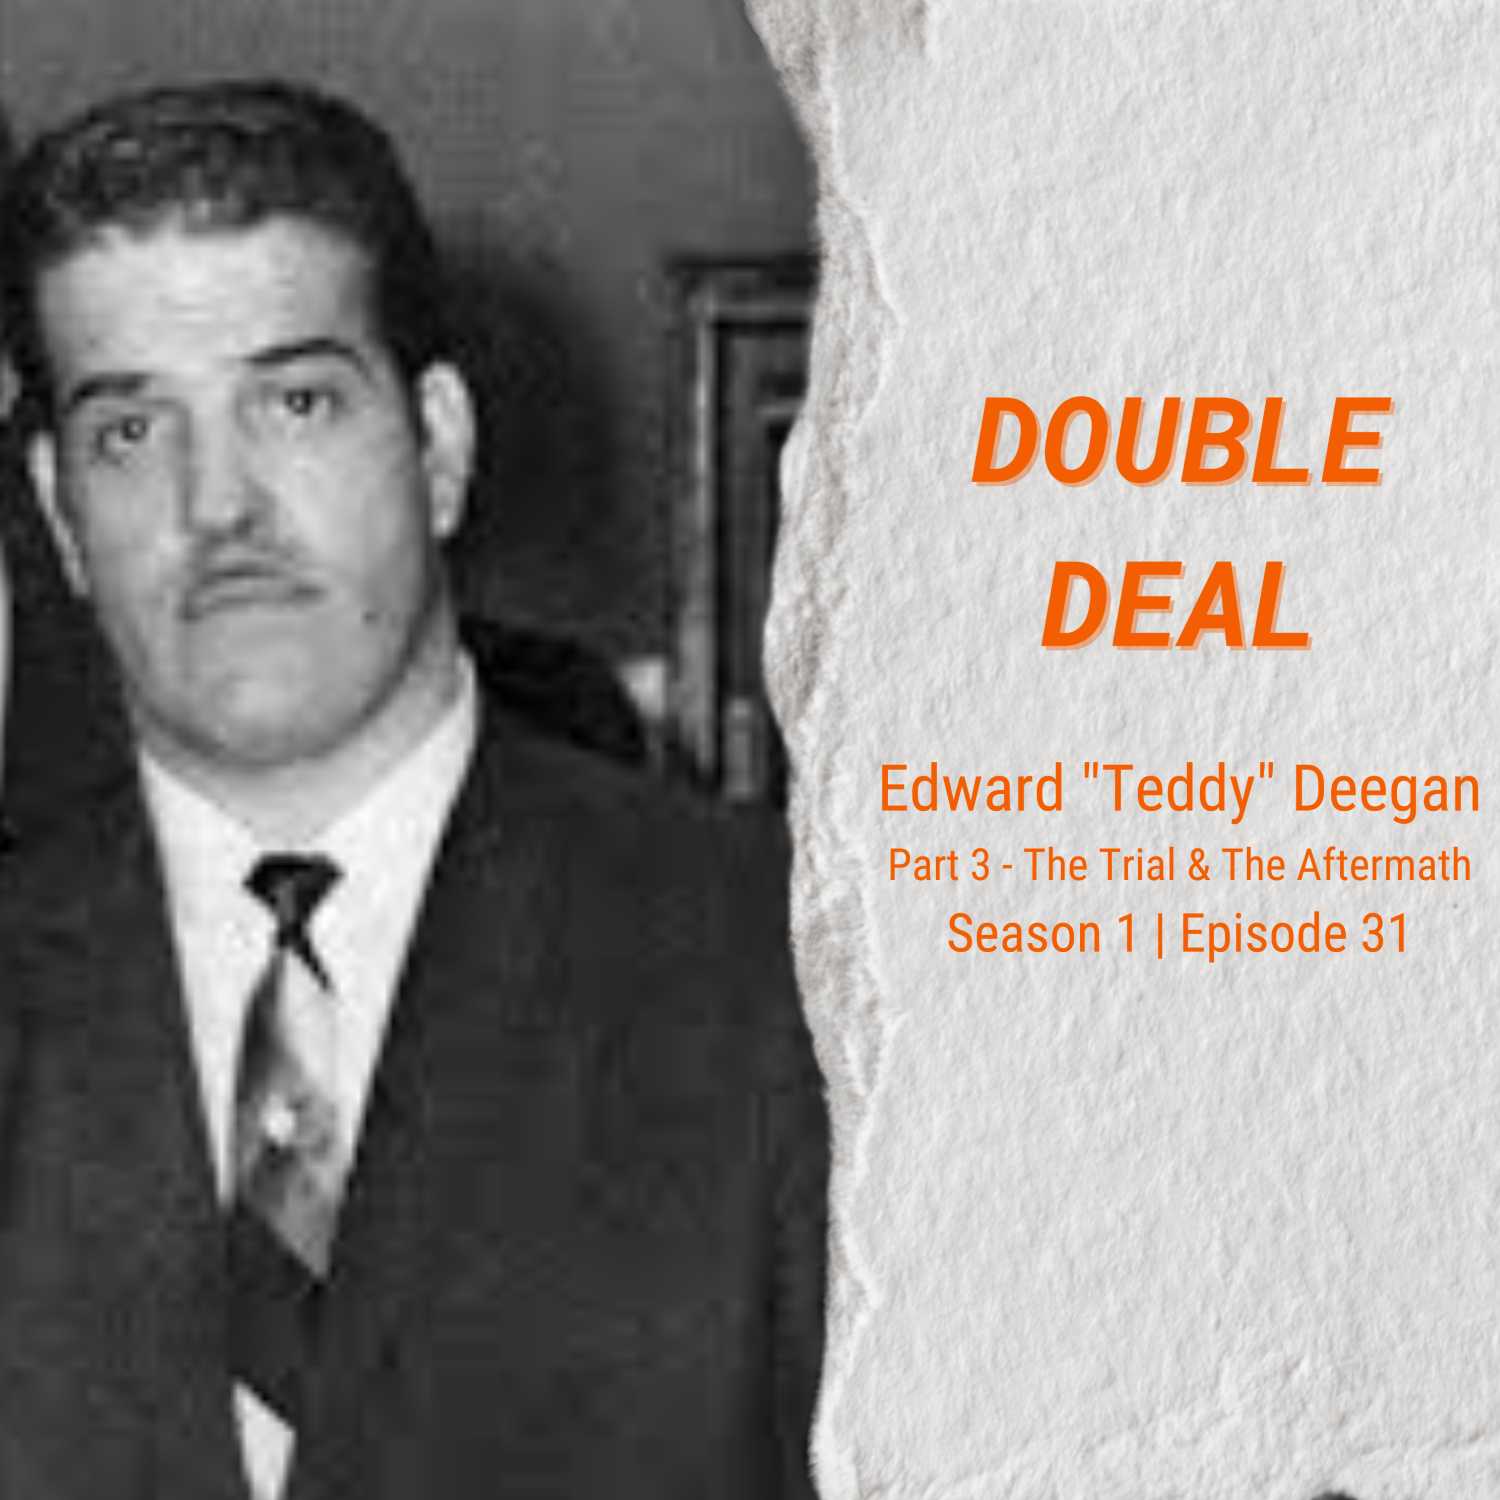 Edward "Teddy" Deegan - Part 3 - The Trial & The Aftermath